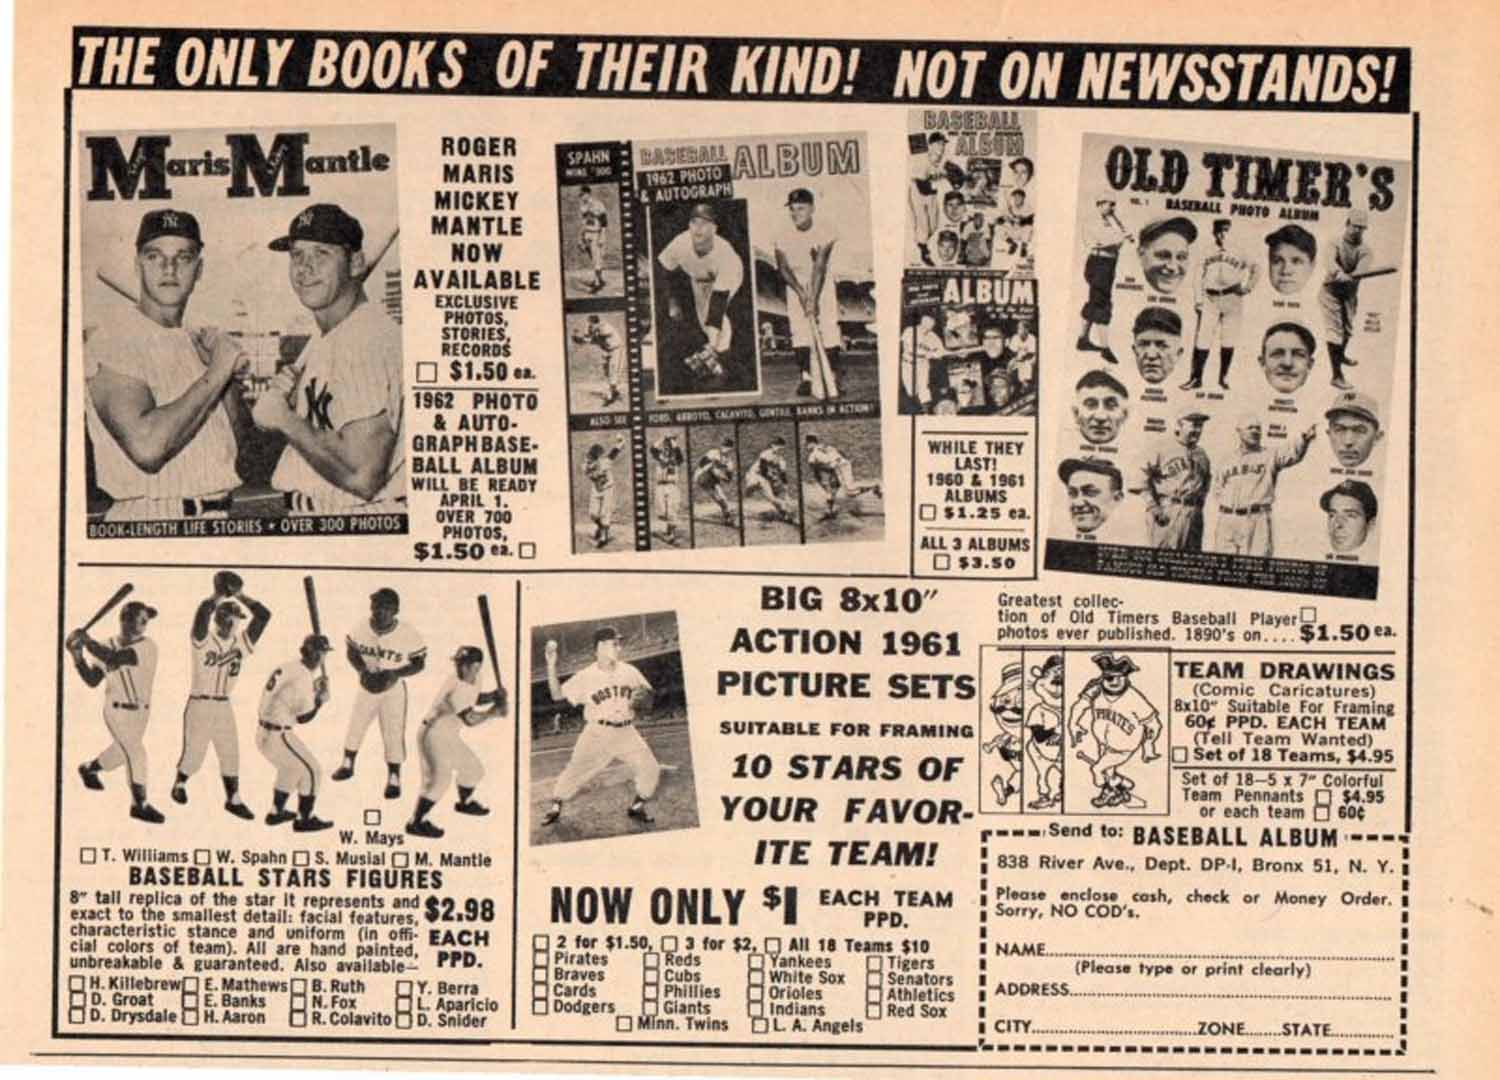 1960 era baseball news